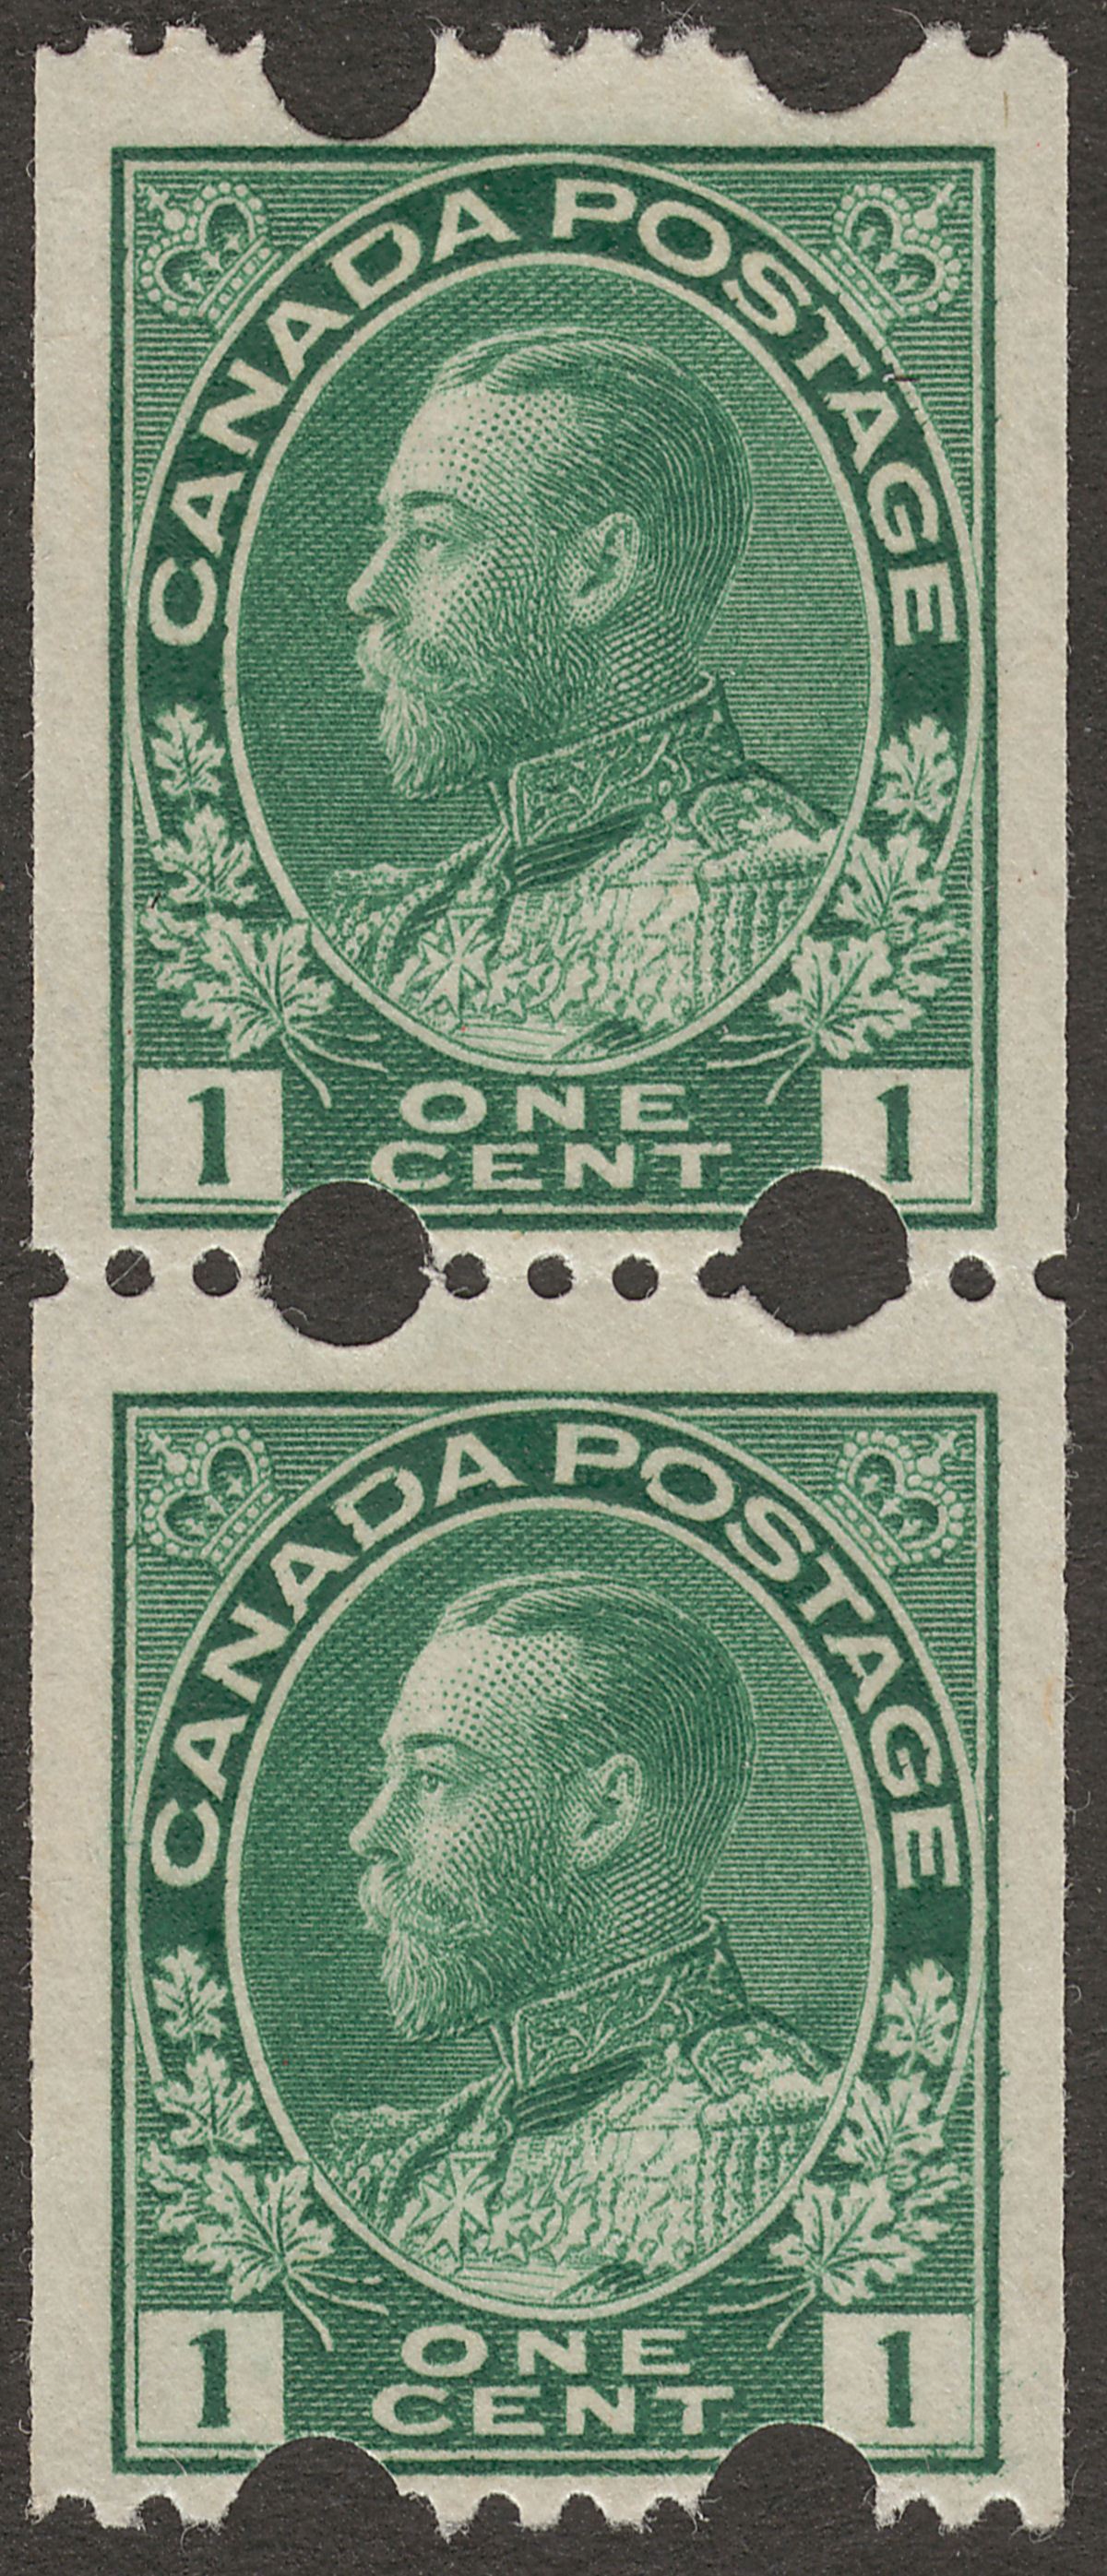 Canada 1918 KGV 1c Pair p12 x Imperf Large Holes Coil Pair Mint SG217a cat £80